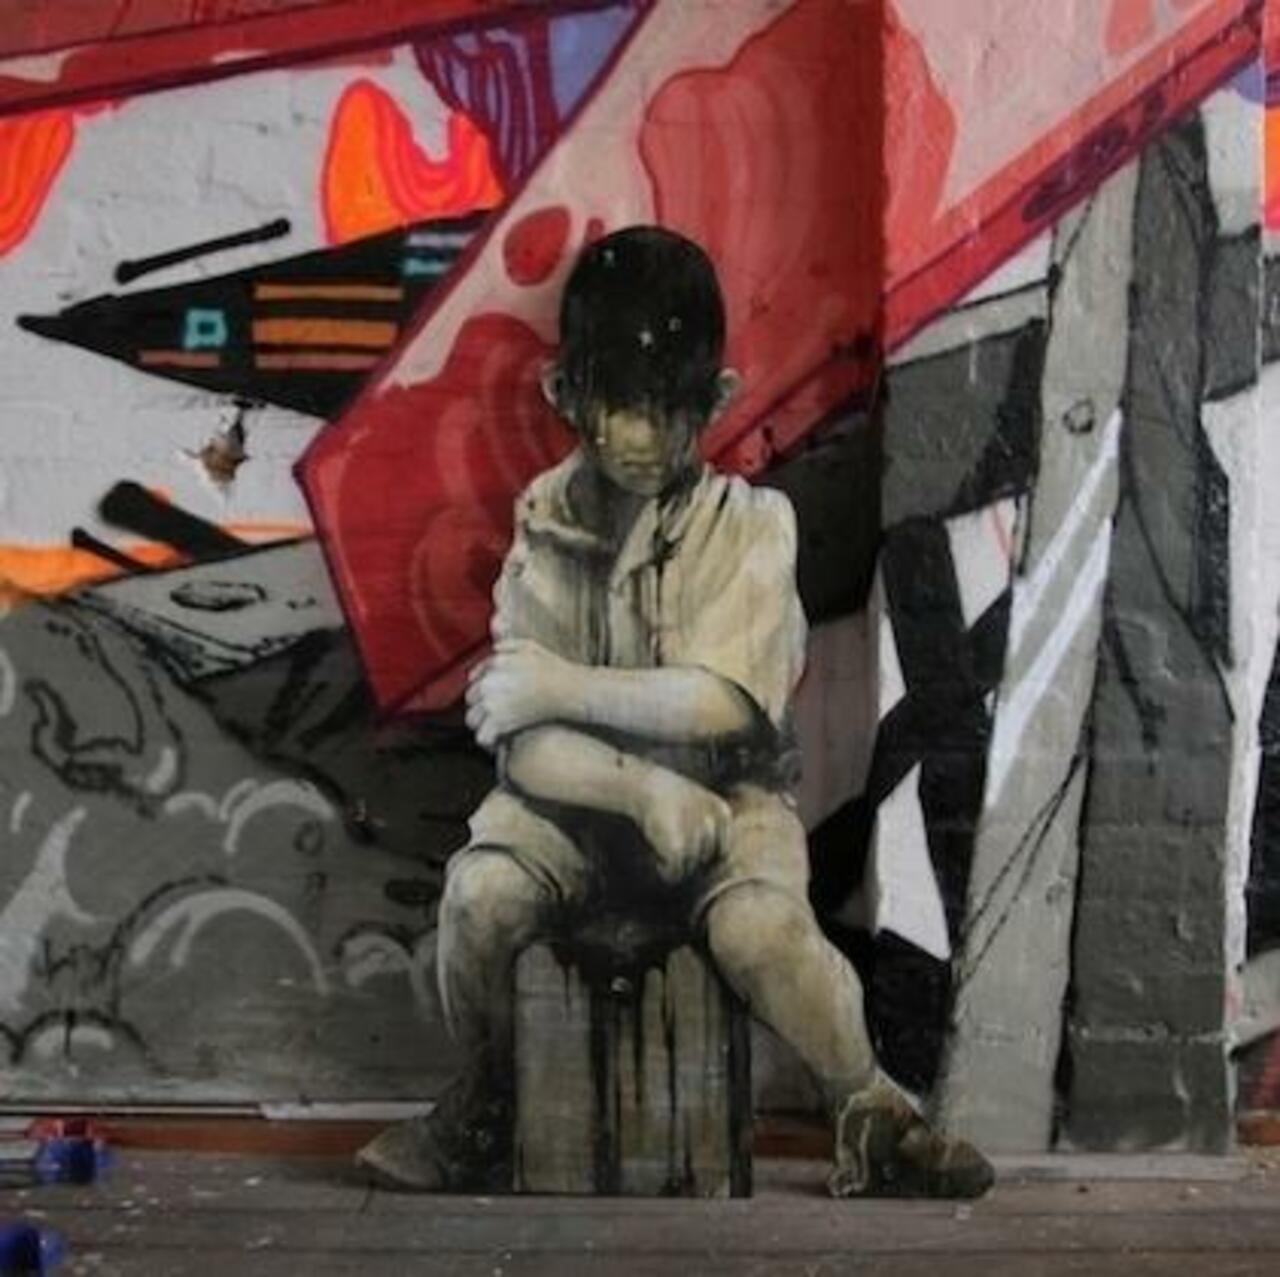 #art 
#streetart
#graffiti # TaylorWhite http://t.co/MAozokuVQm